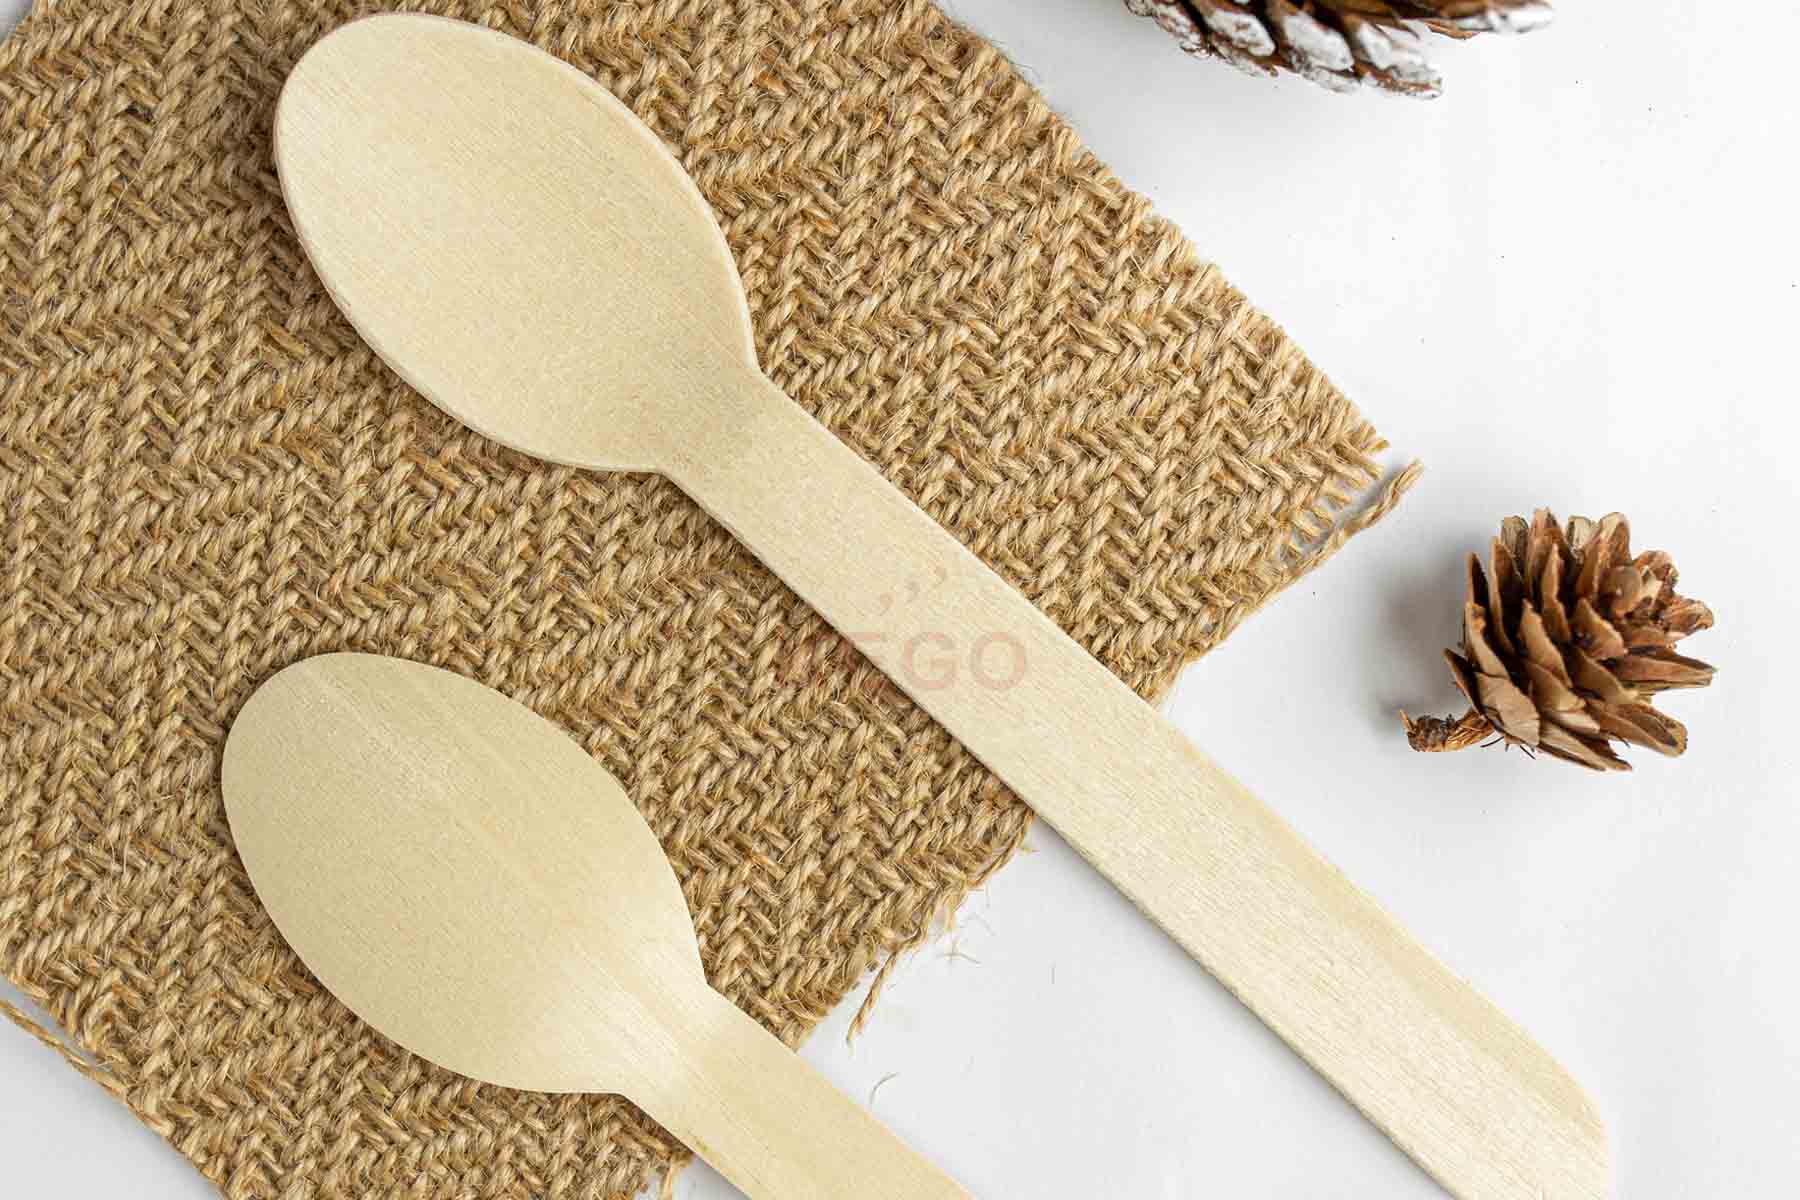 https://kego.com.vn/wp-content/uploads/2015/09/disposable-wooden-spoon-1.jpg